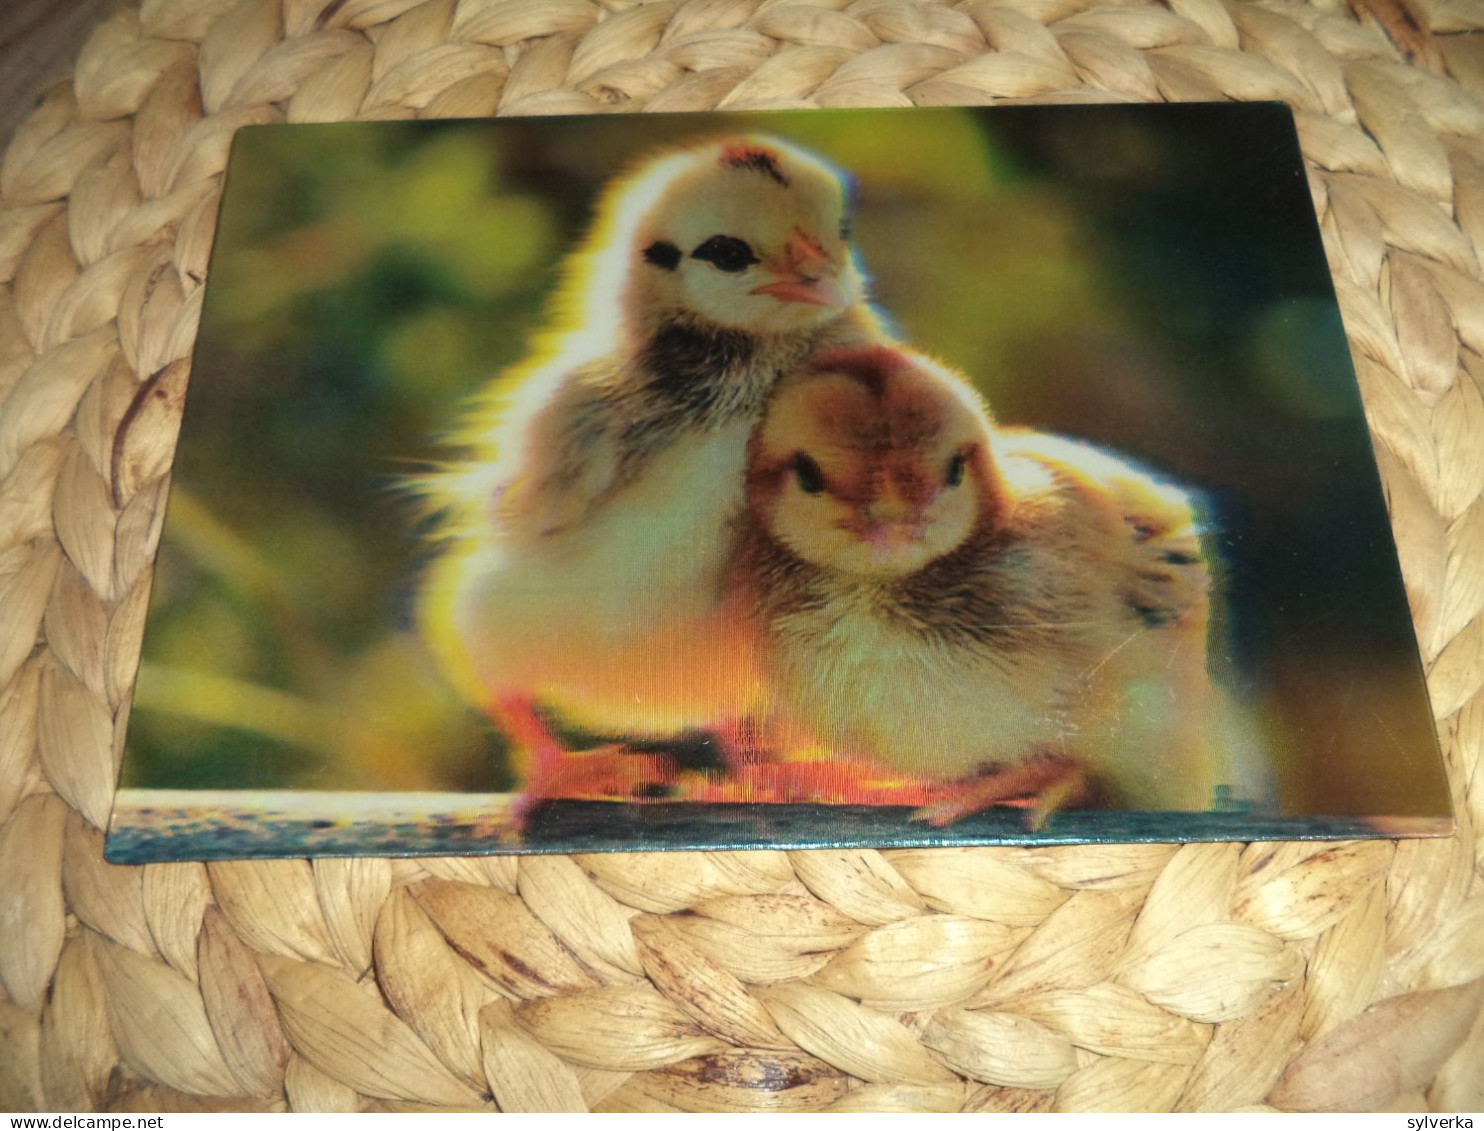 Chicken, Hähnchen 3D Lenticular  Postkarte Postcard - Lions